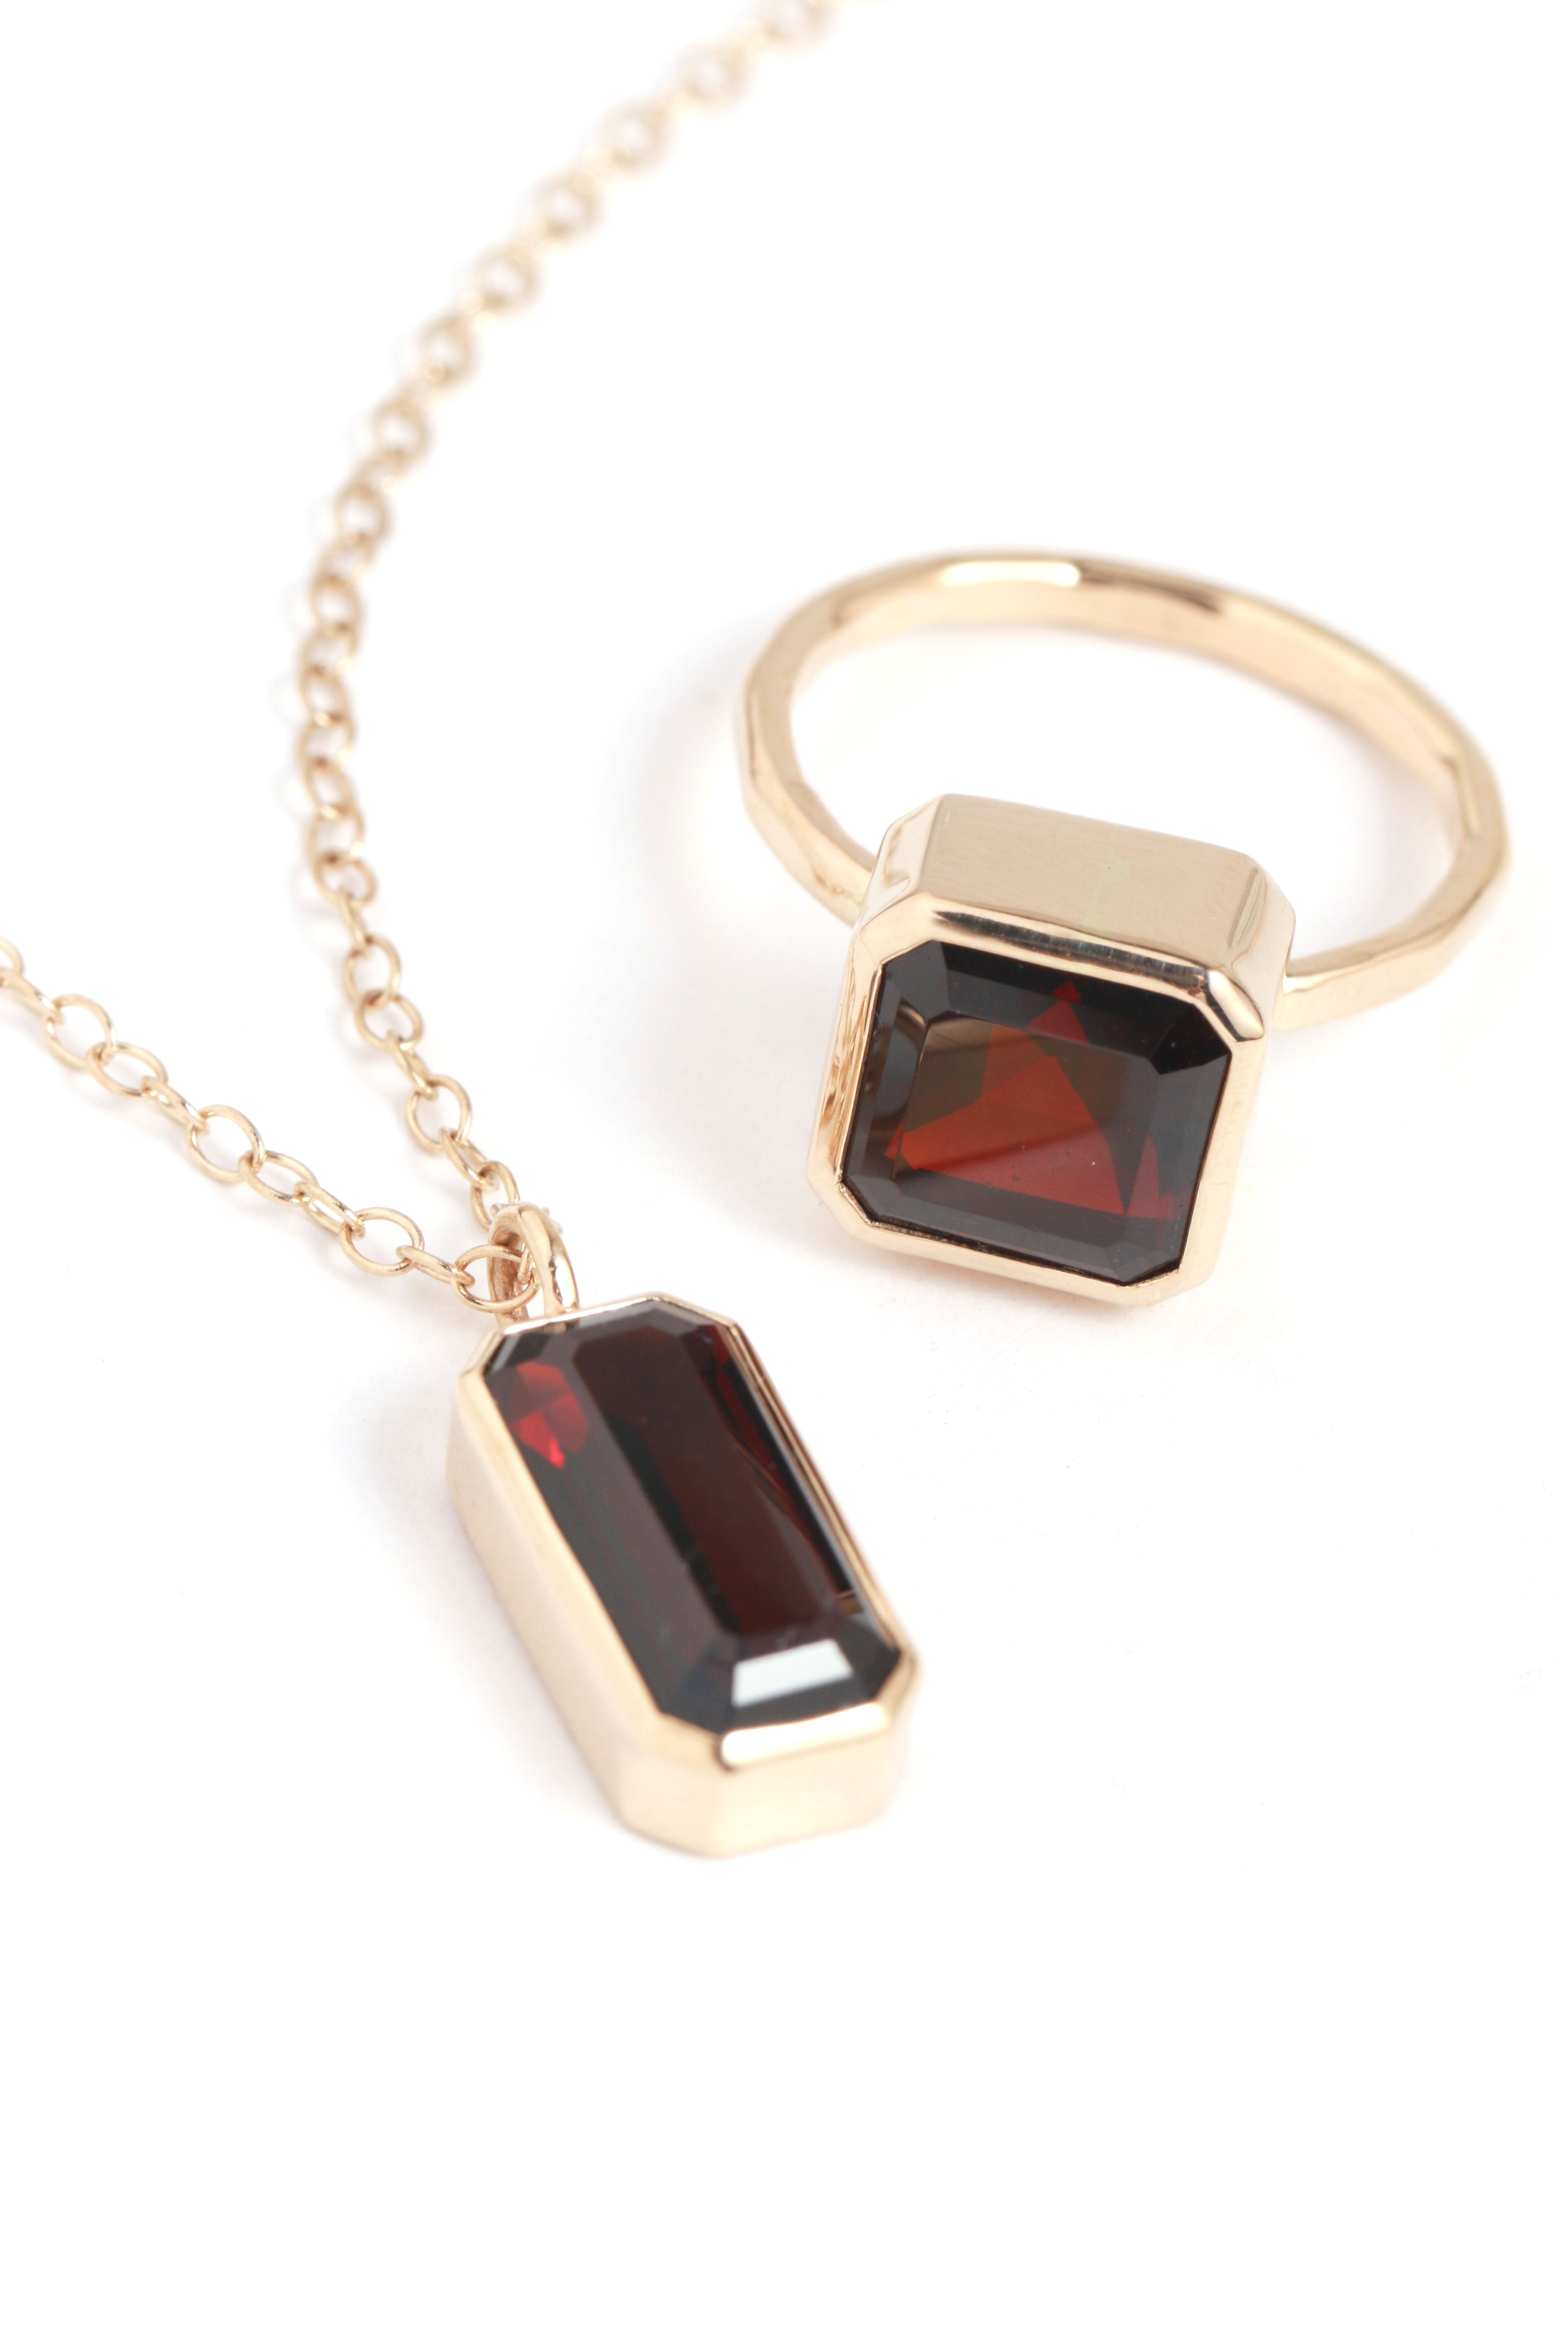 custom heirloom garnet ring and pendant necklace